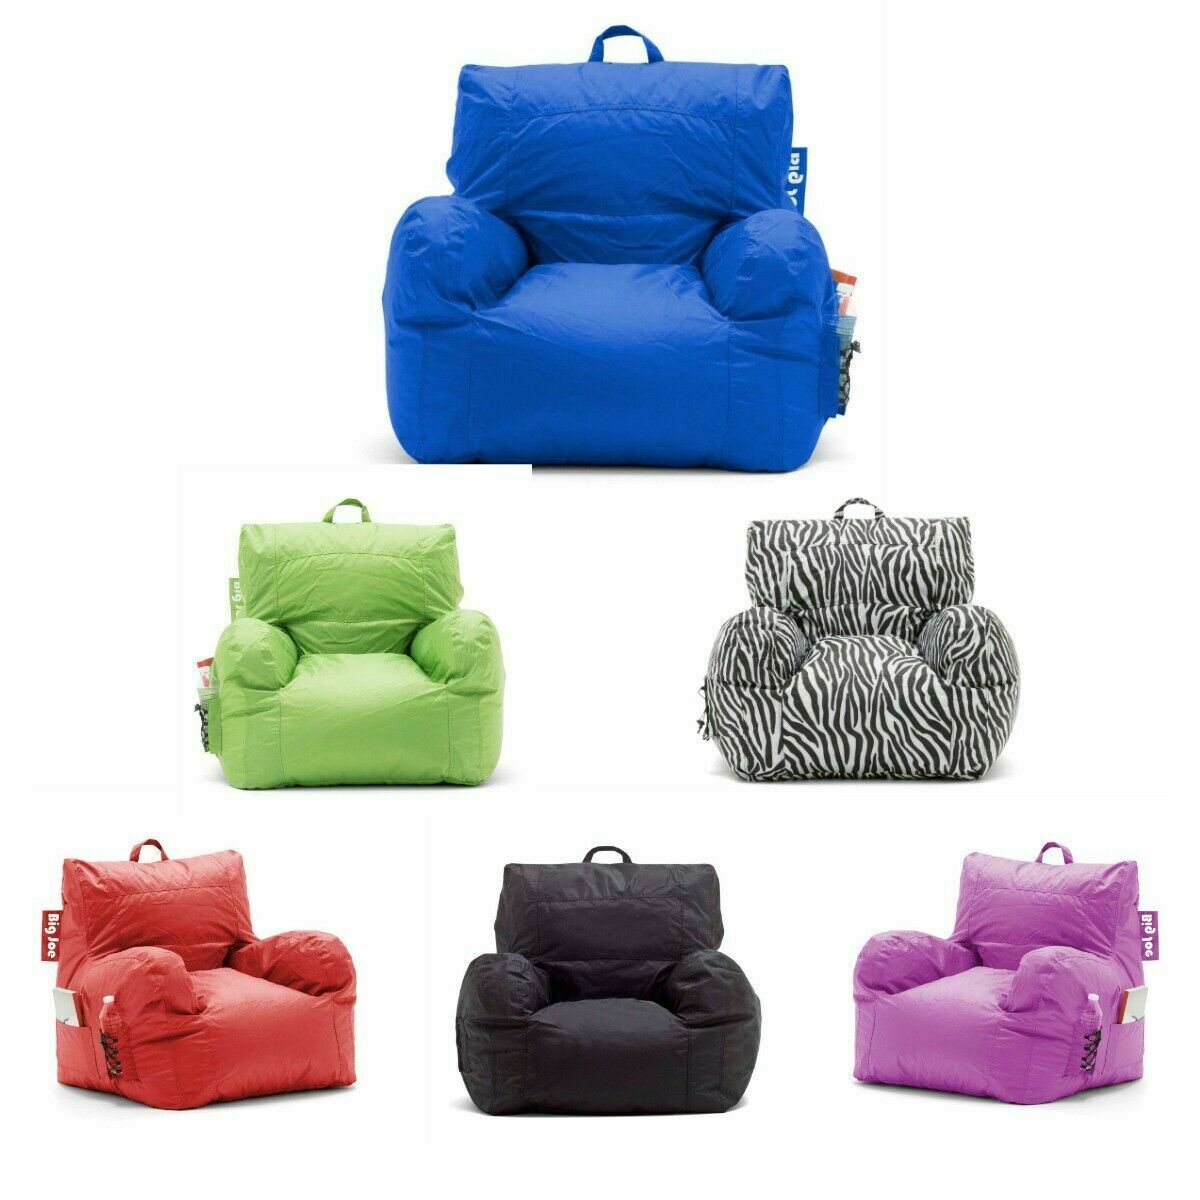 Big Joe Bean Bag Dorm Chair Cozy Comfort Stain Resistant Waterproof Sofa Multi